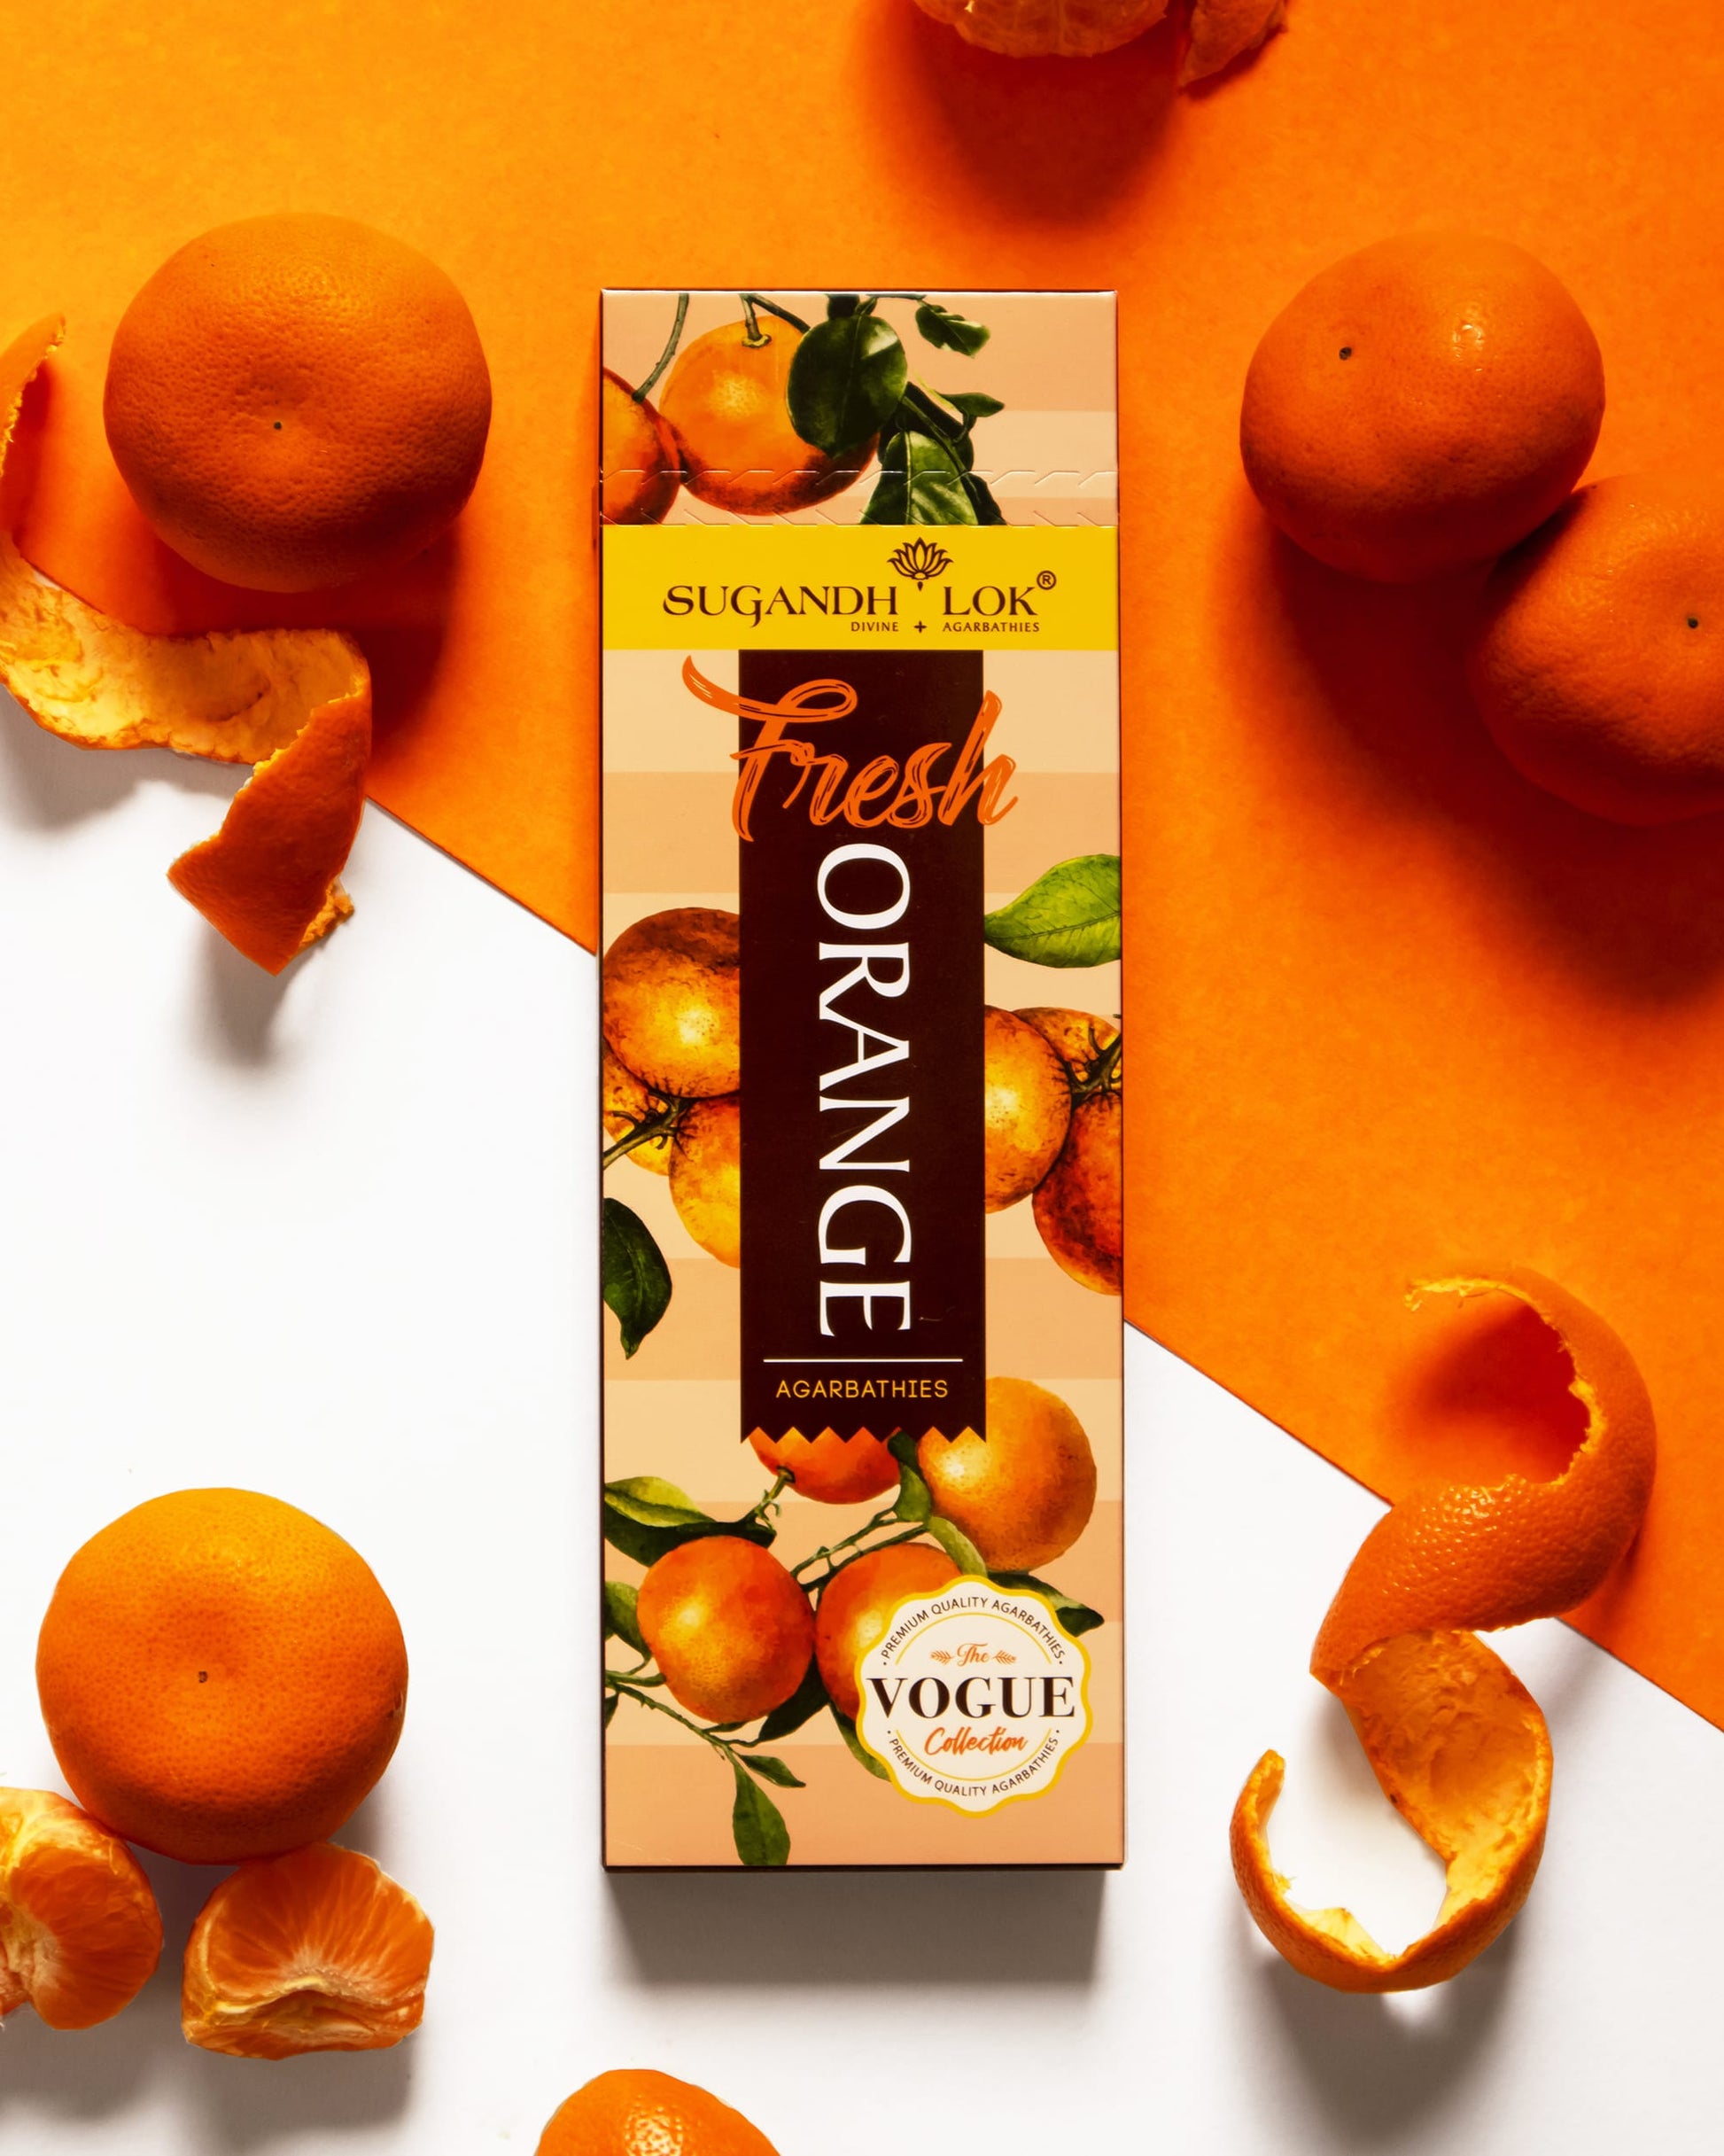 Fresh Orange Agarbatti Box surrounded by oranges